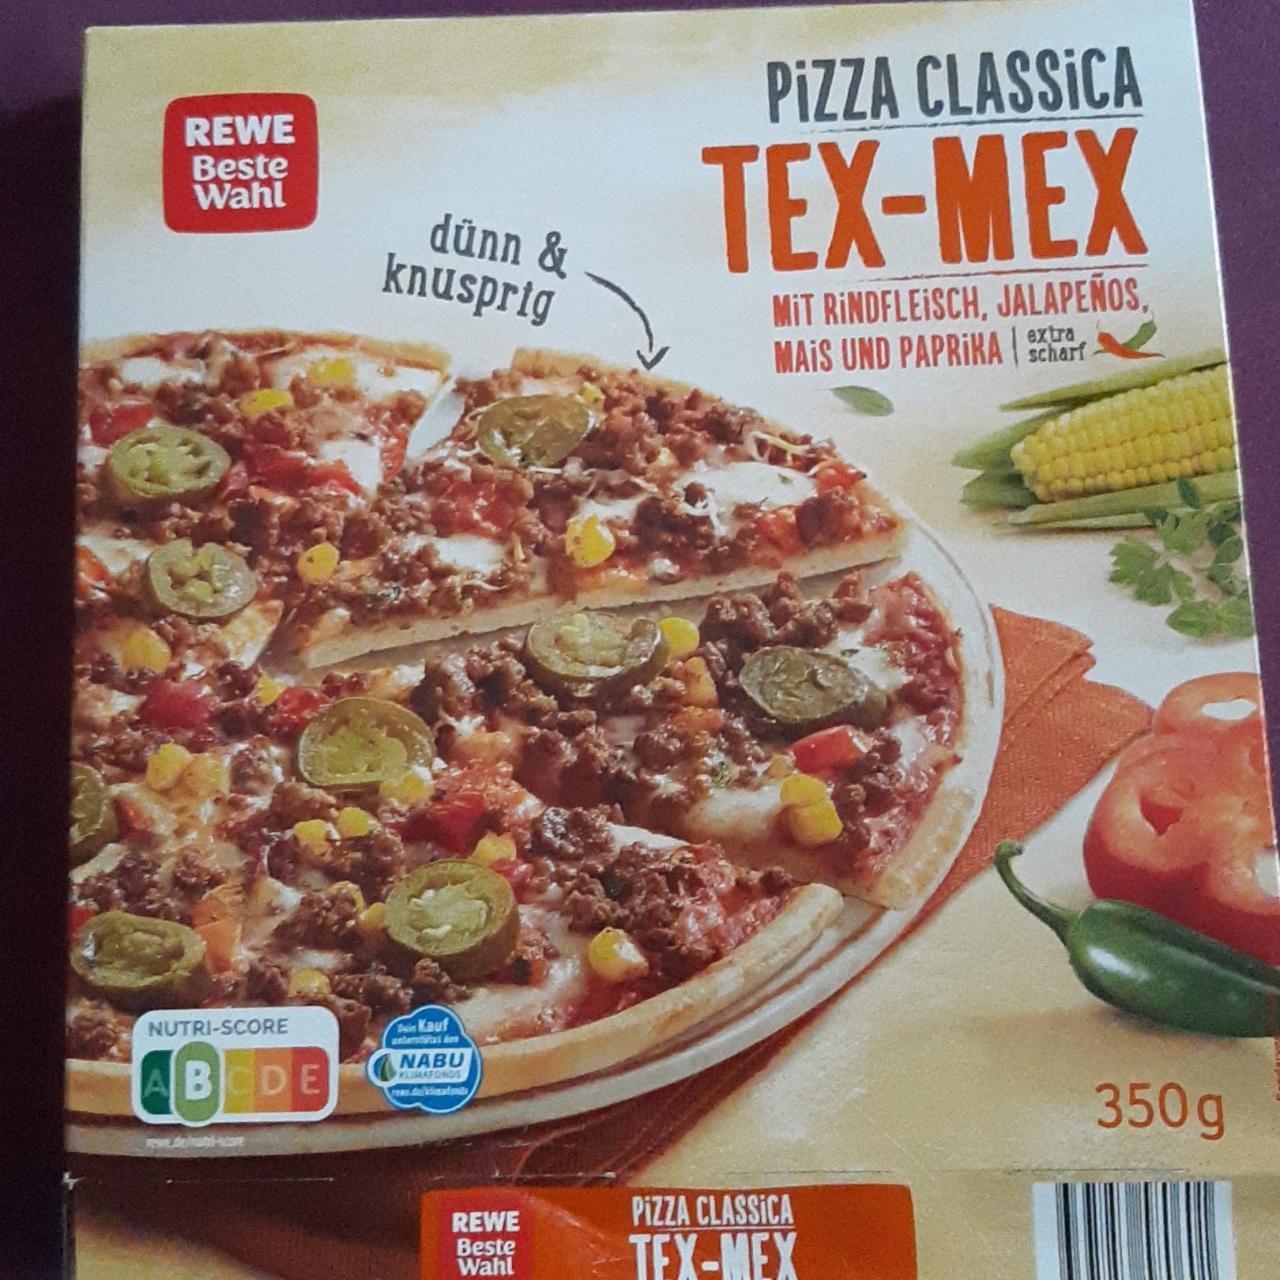 Képek - Pizza classica Tex Mex Rewe